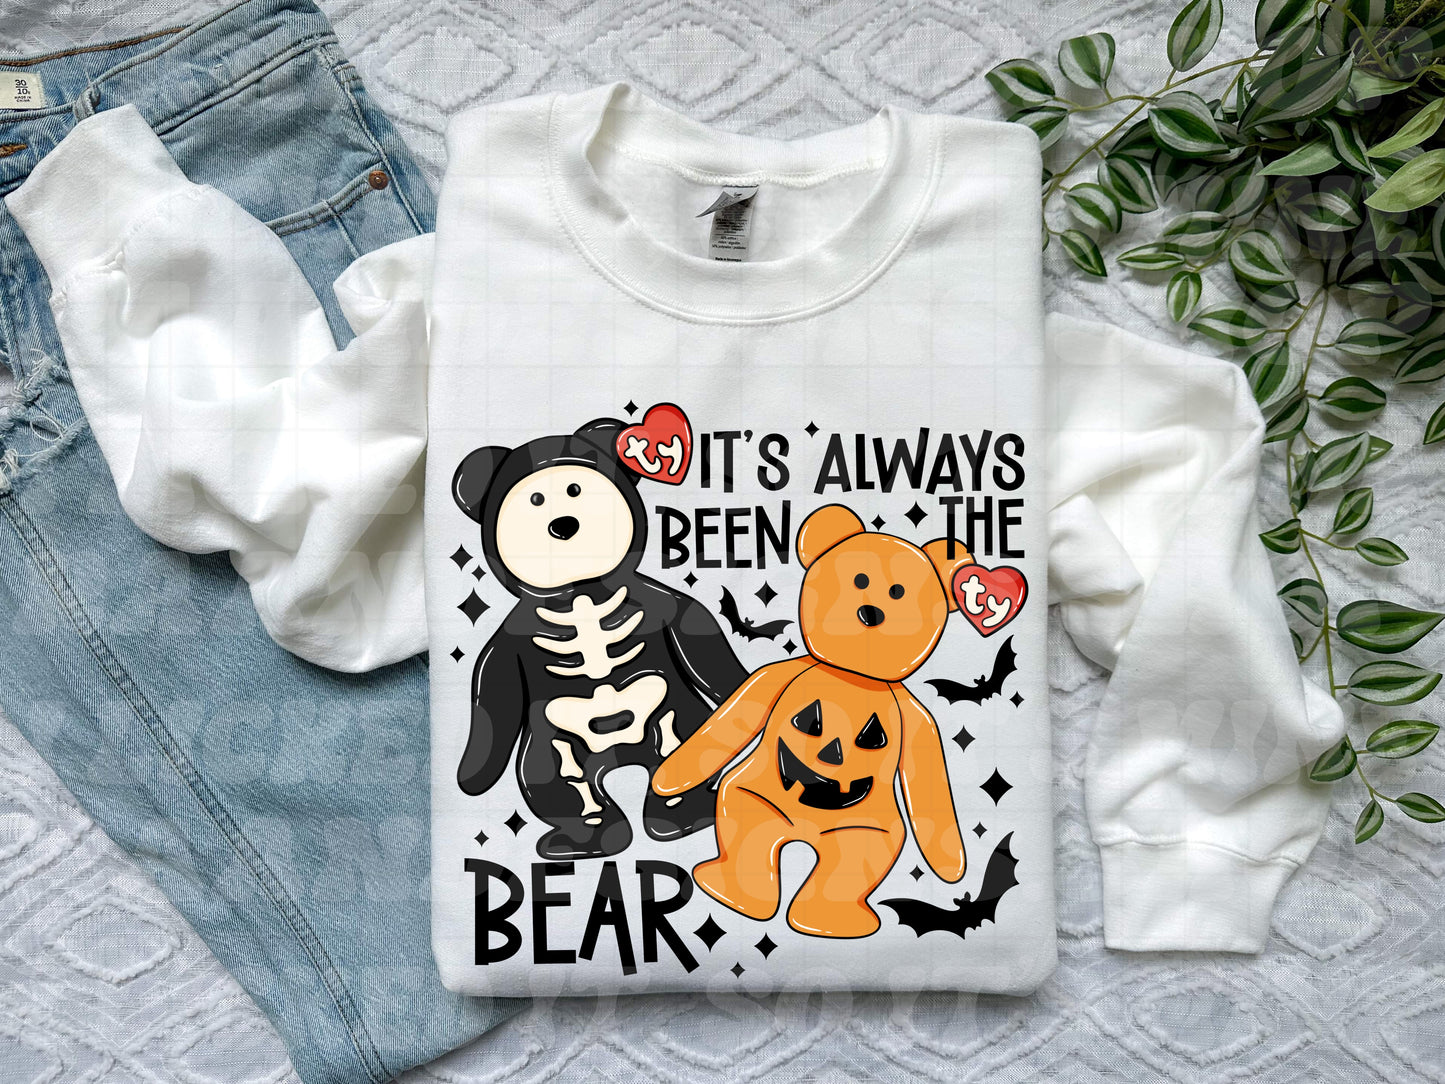 It’s Always Been the Bear